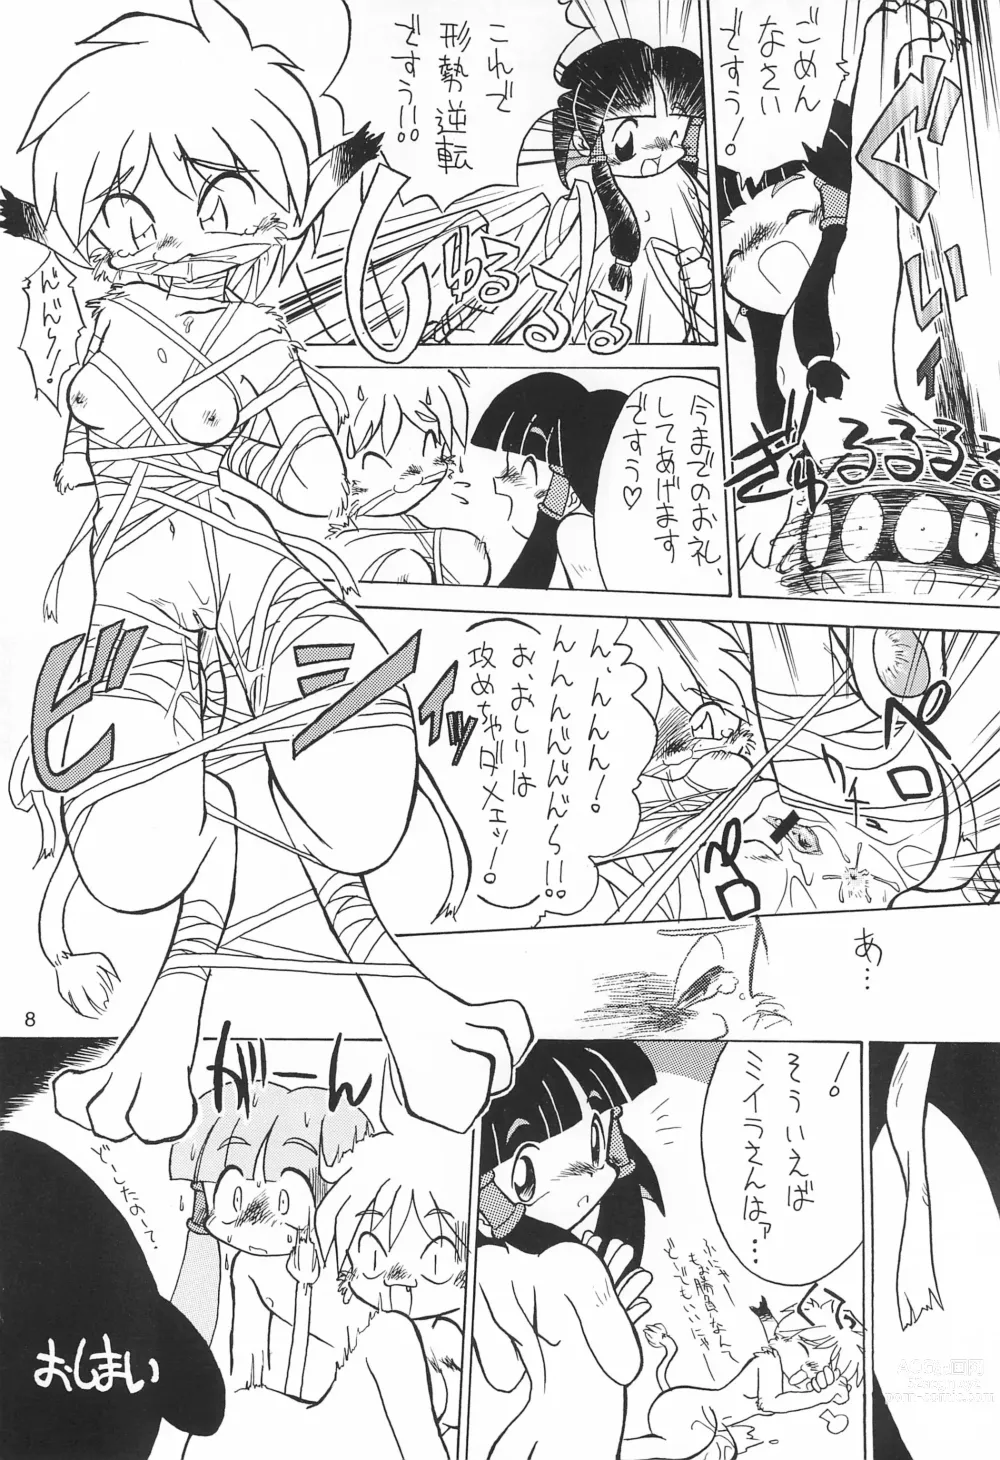 Page 8 of doujinshi Yonemaru Archive